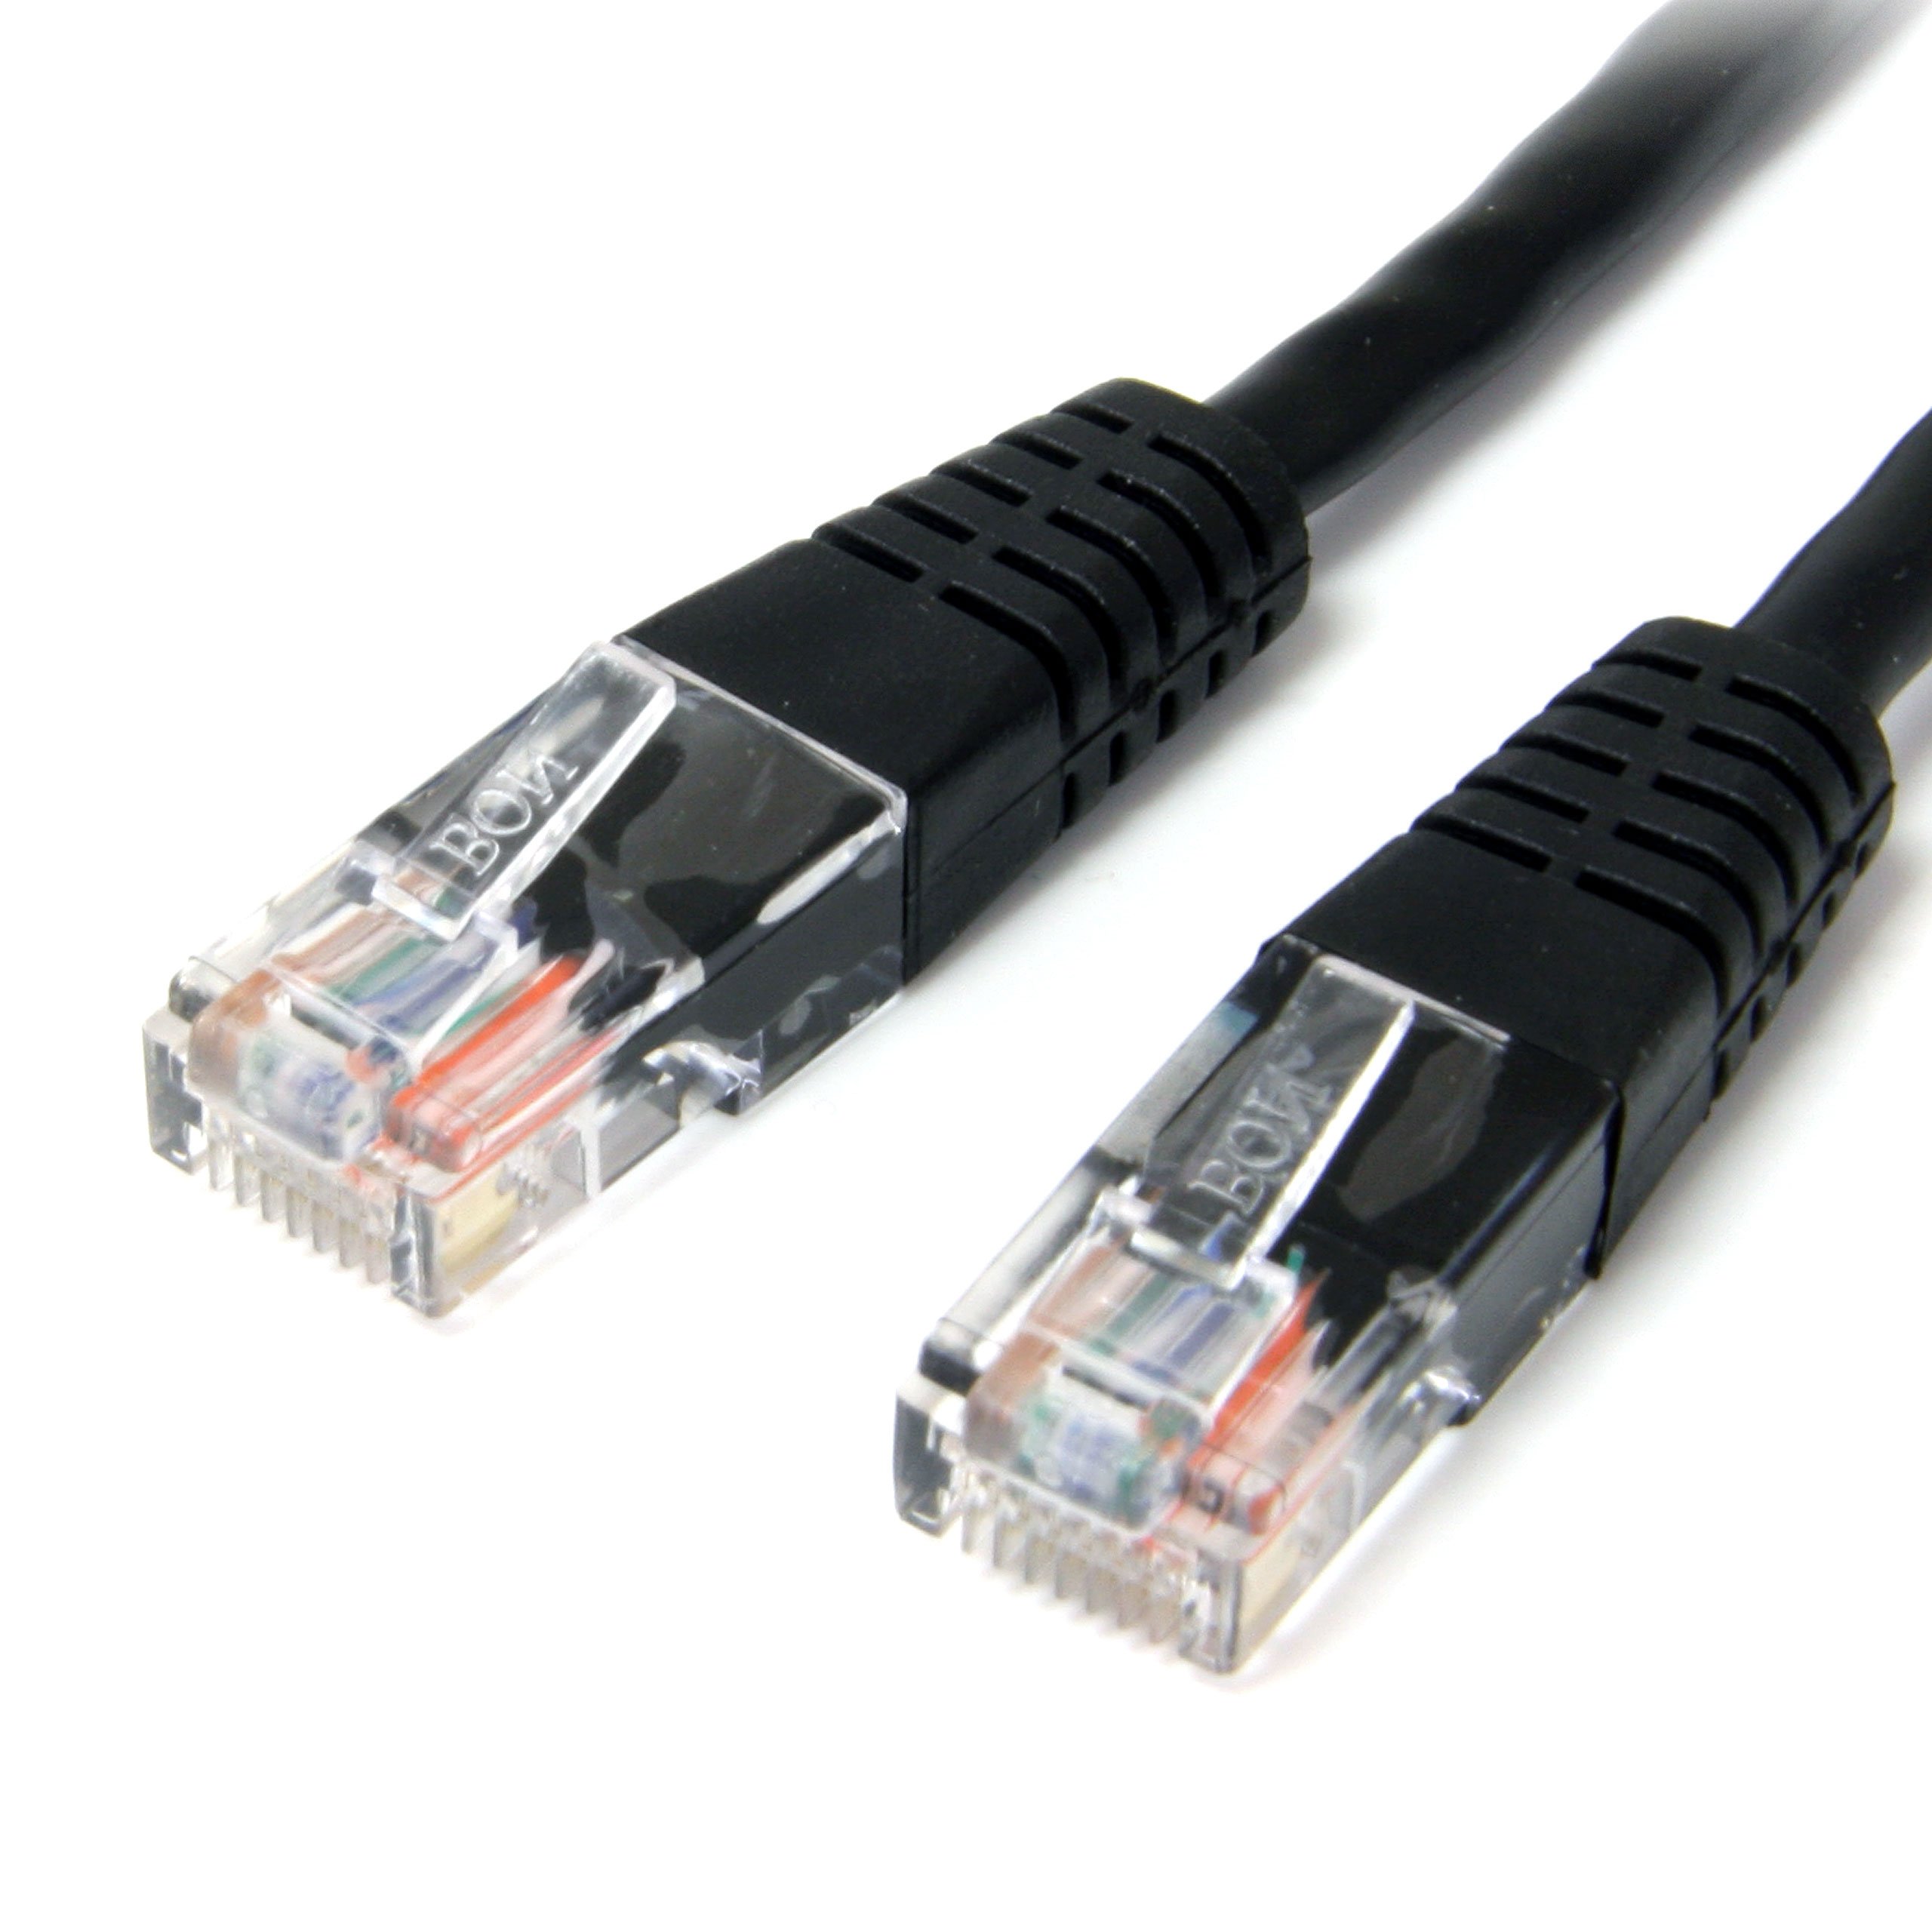 StarTech.com Cat5e Ethernet Cable - 3 ft - Black - Patch Cable - Molded Cat5e Cable - Short Network Cable - Ethernet Cord - Cat 5e Cable - 3ft (M45PATCH3BK)